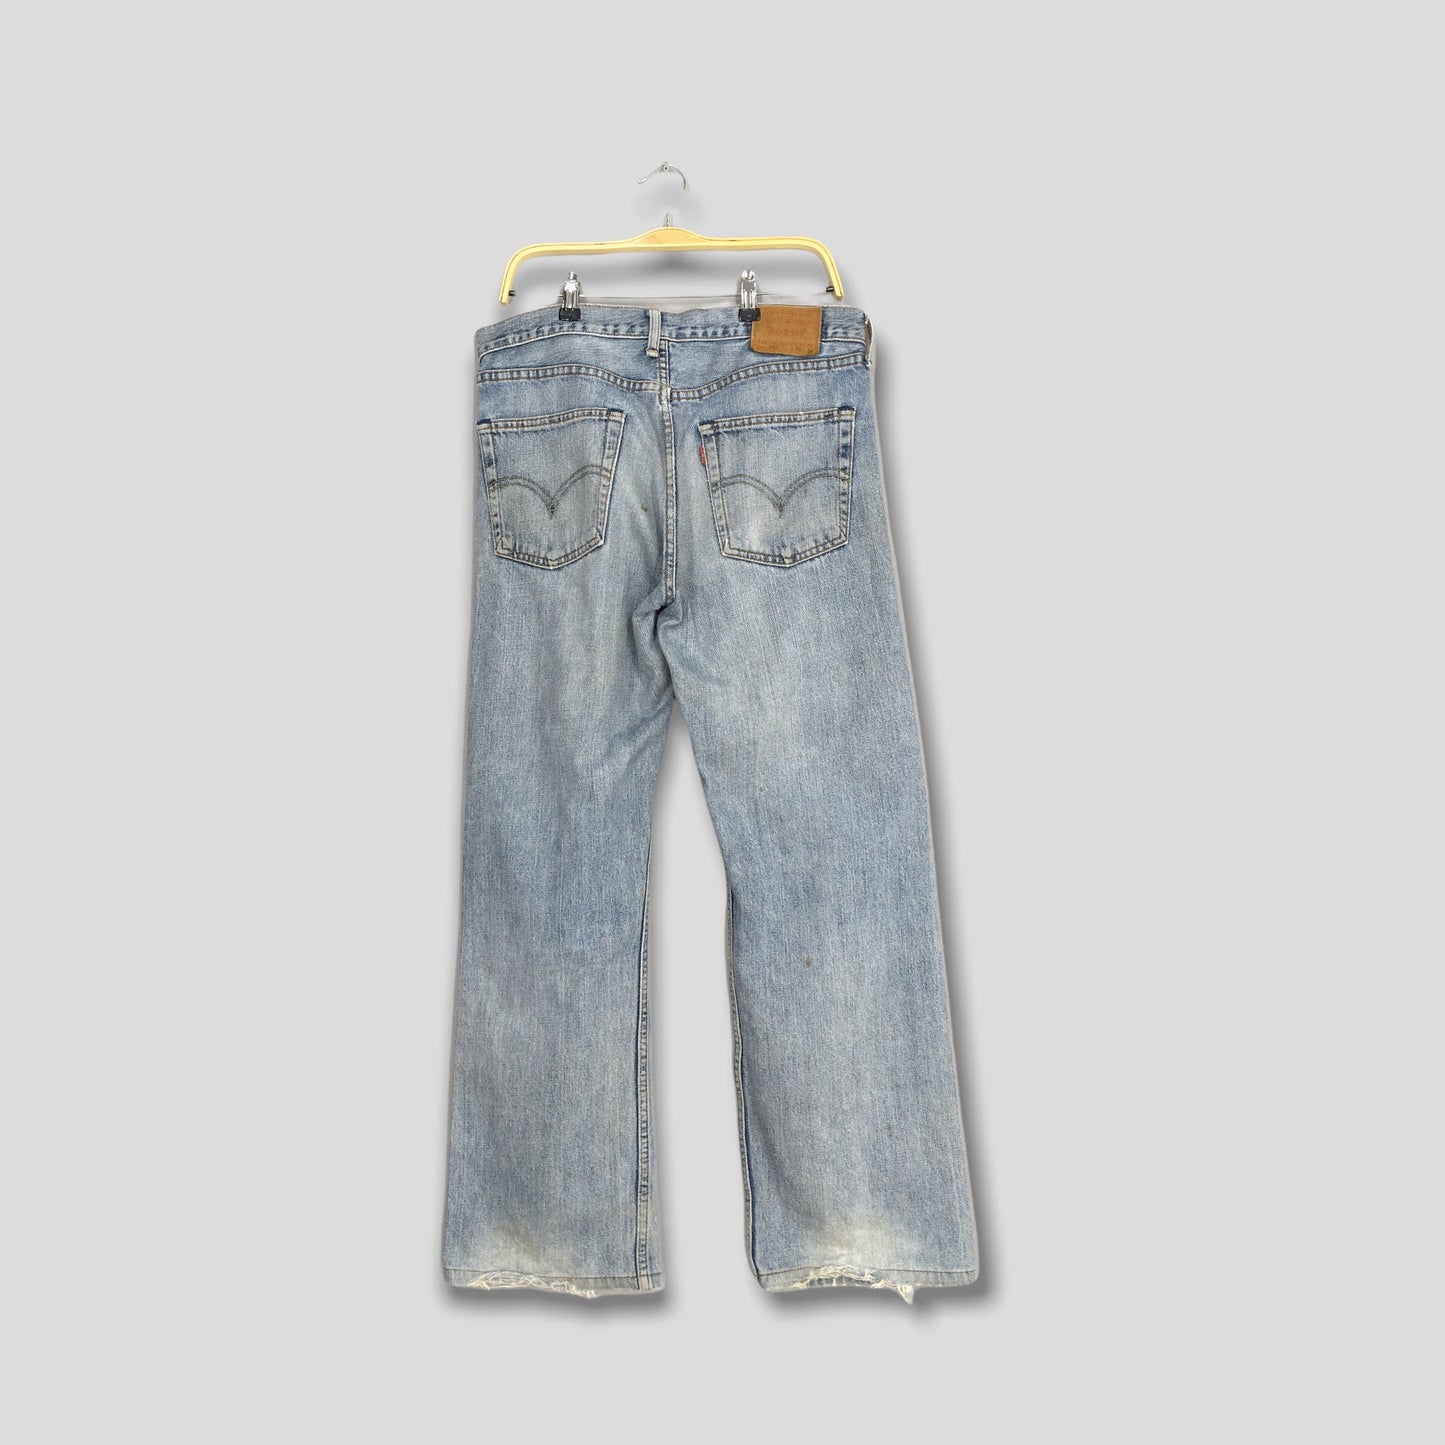 Levi's 503 Light Blue Distressed Jeans Size 36x30